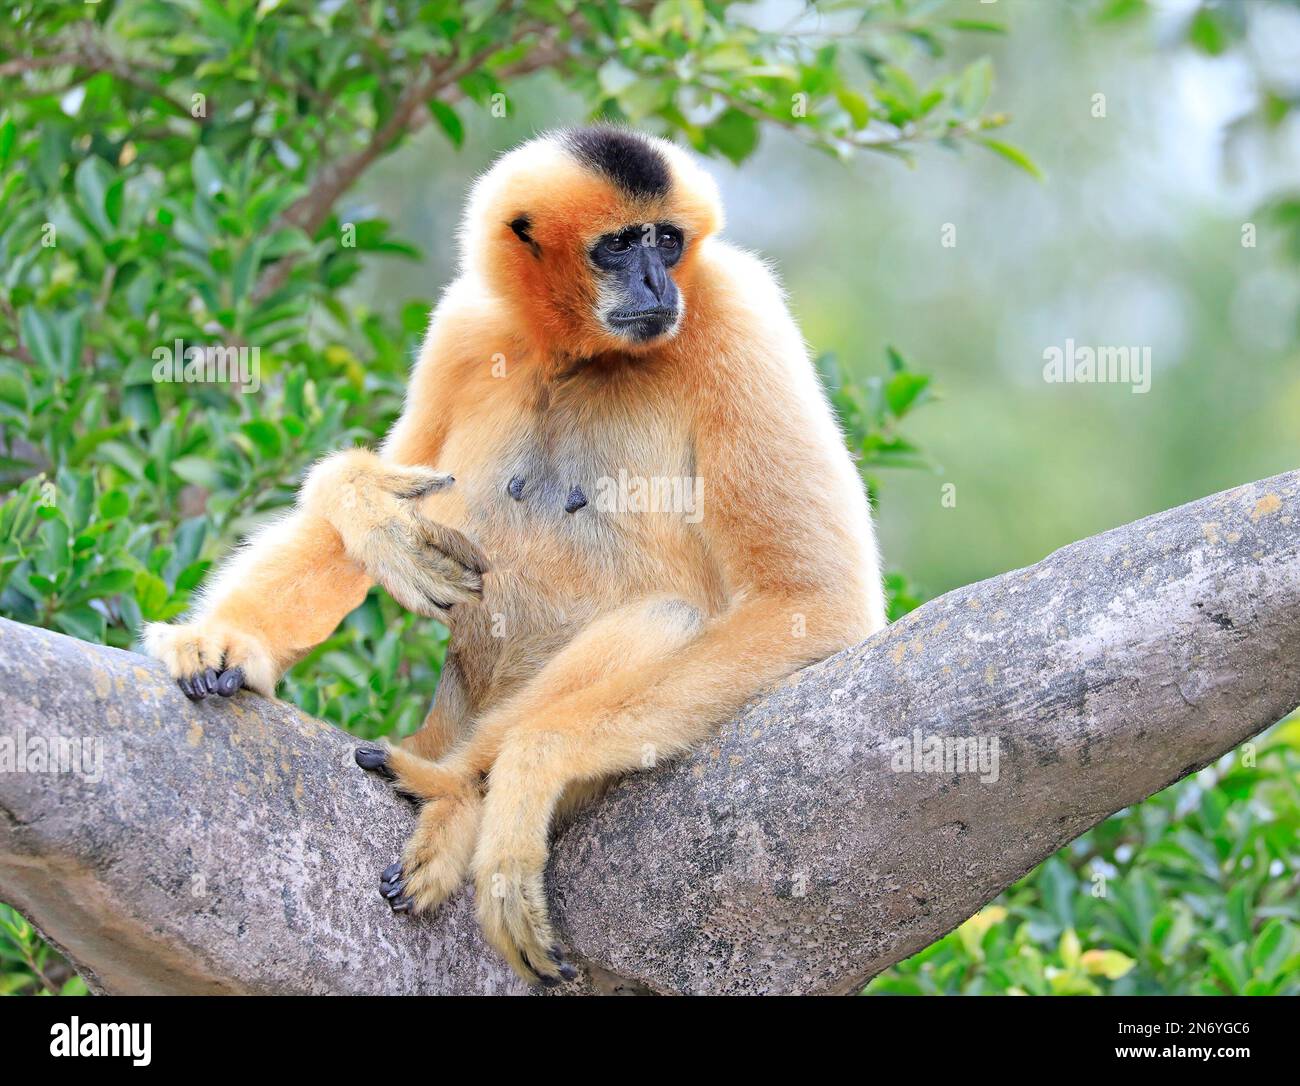 White-cheeked Gibbon Monkey portrait with green background Stock Photo